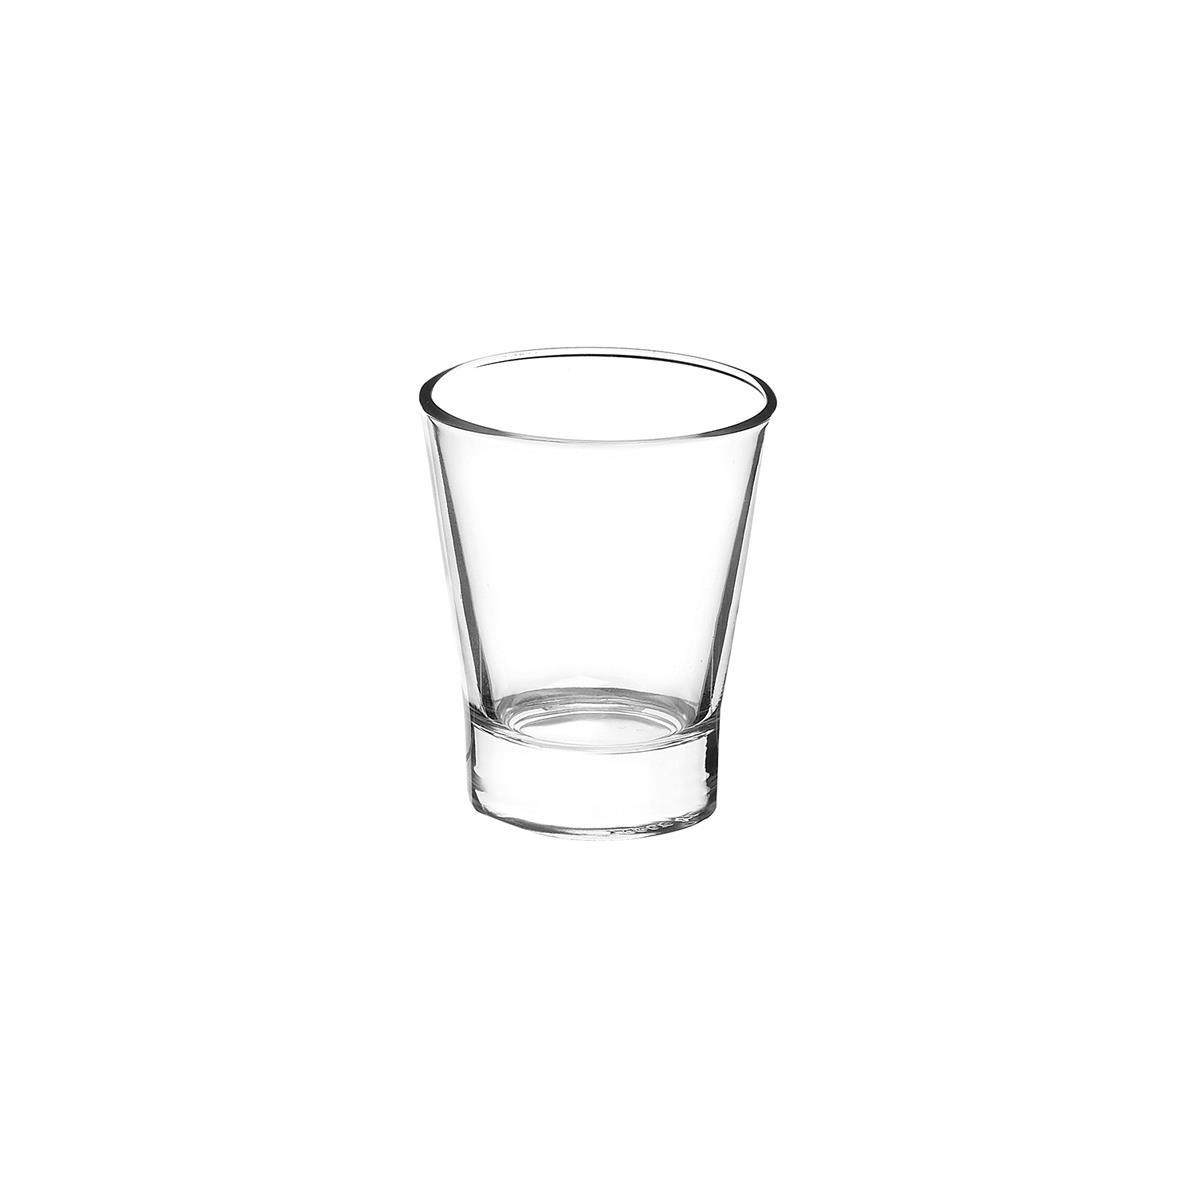 Waterglas Cafeïno 9 cl